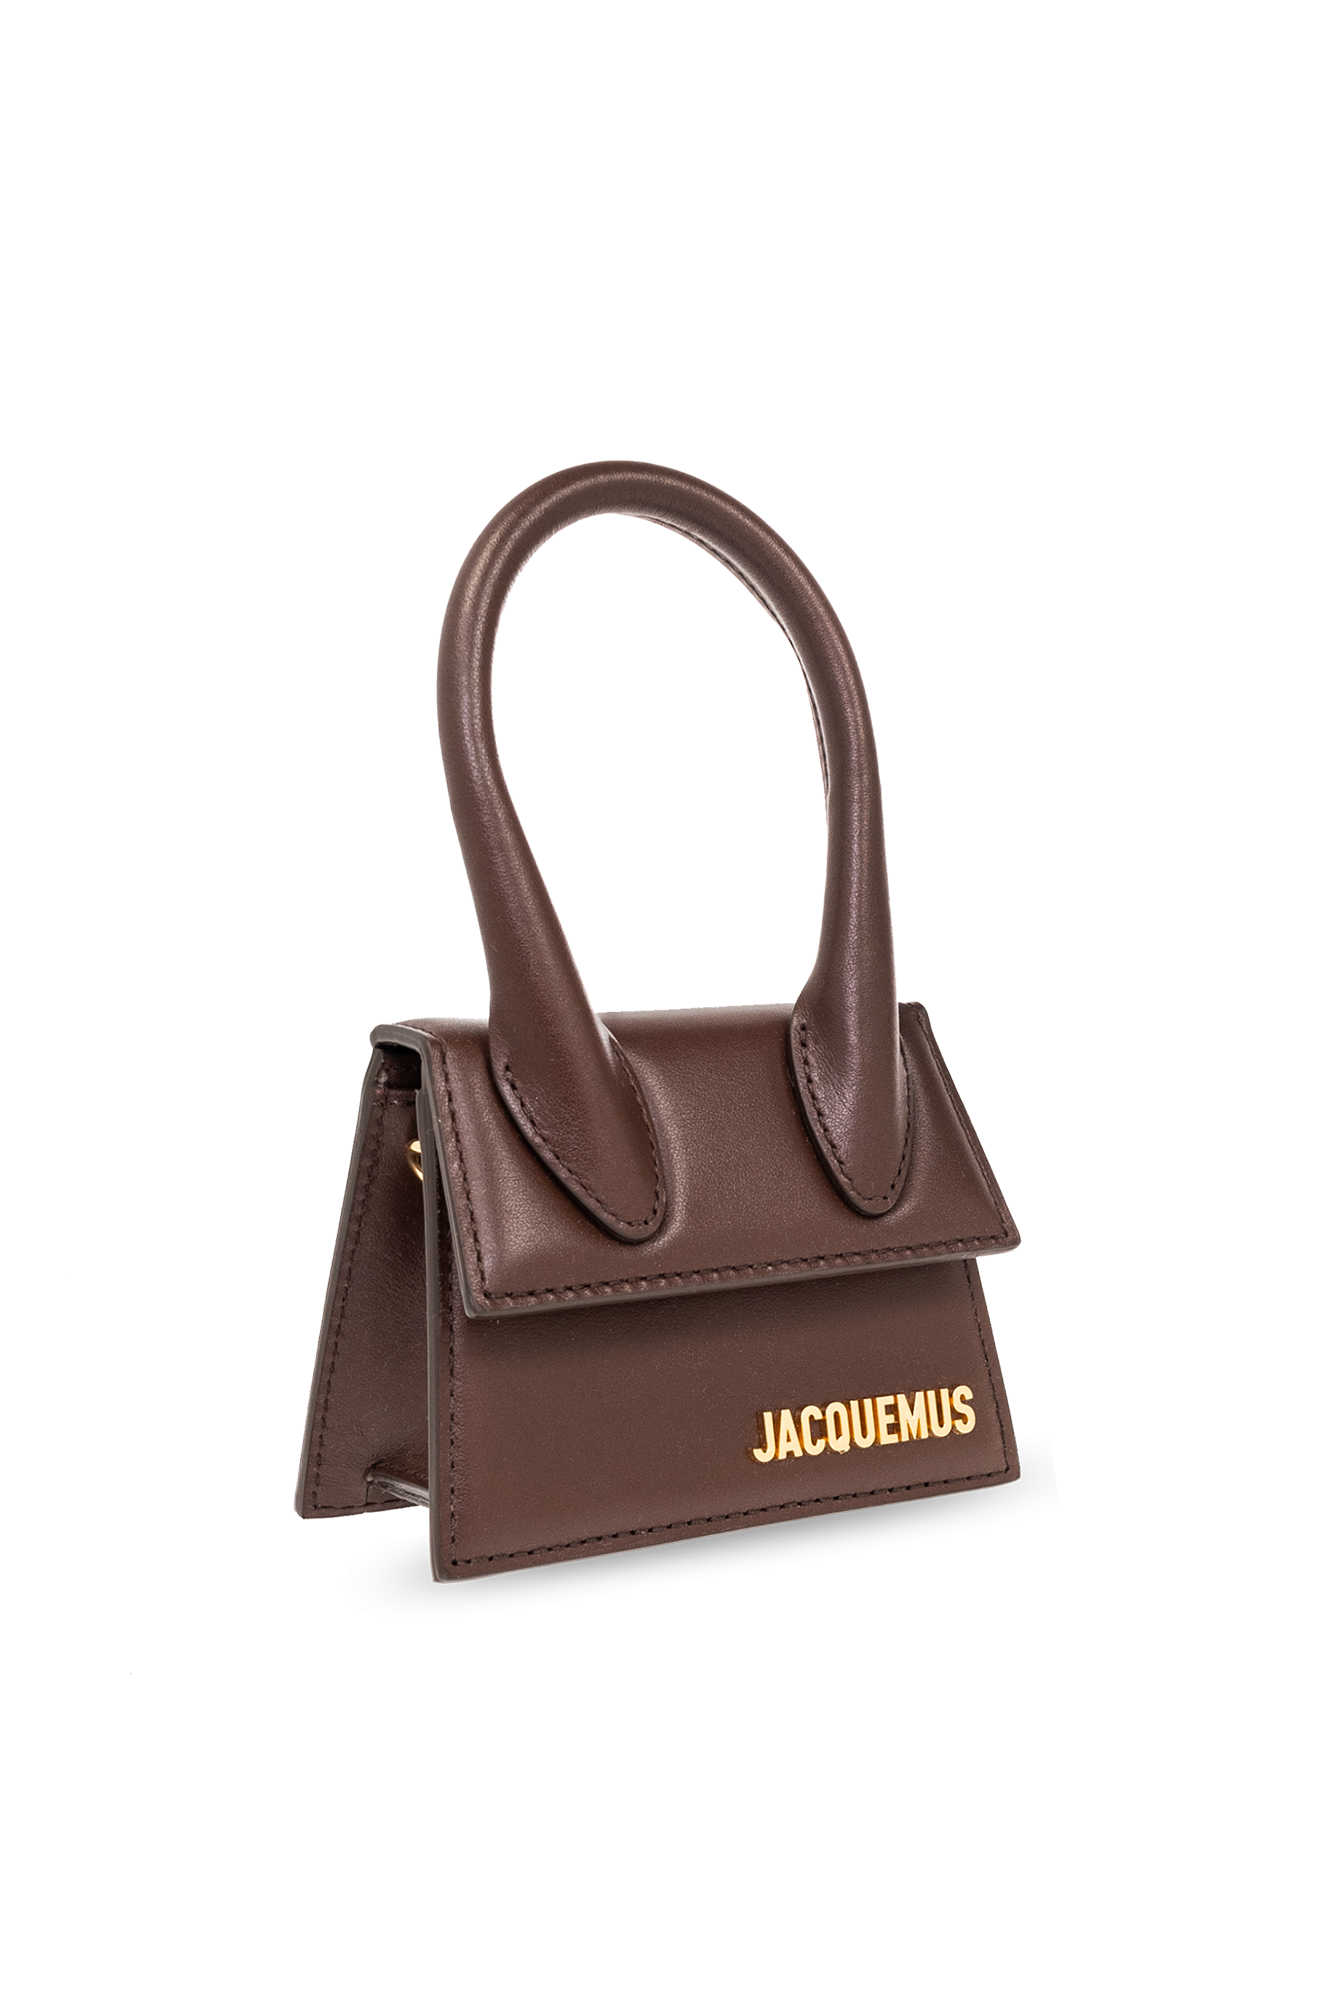 Brown ‘Le Chiquito’ shoulder bag Jacquemus - Vitkac Germany